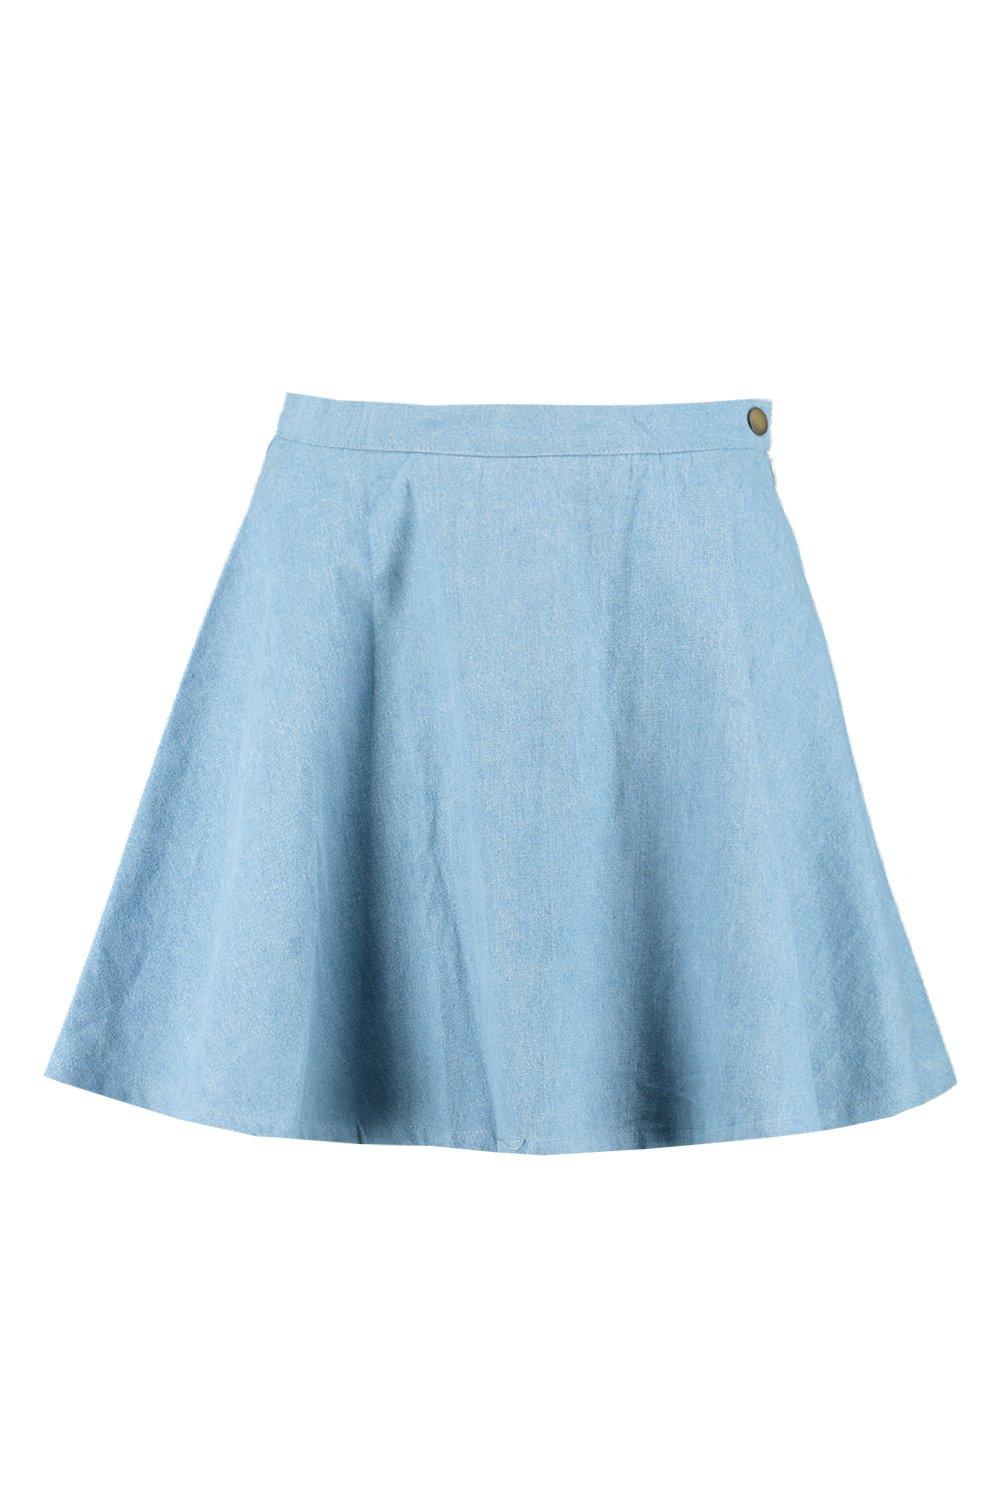 short denim skirts uk